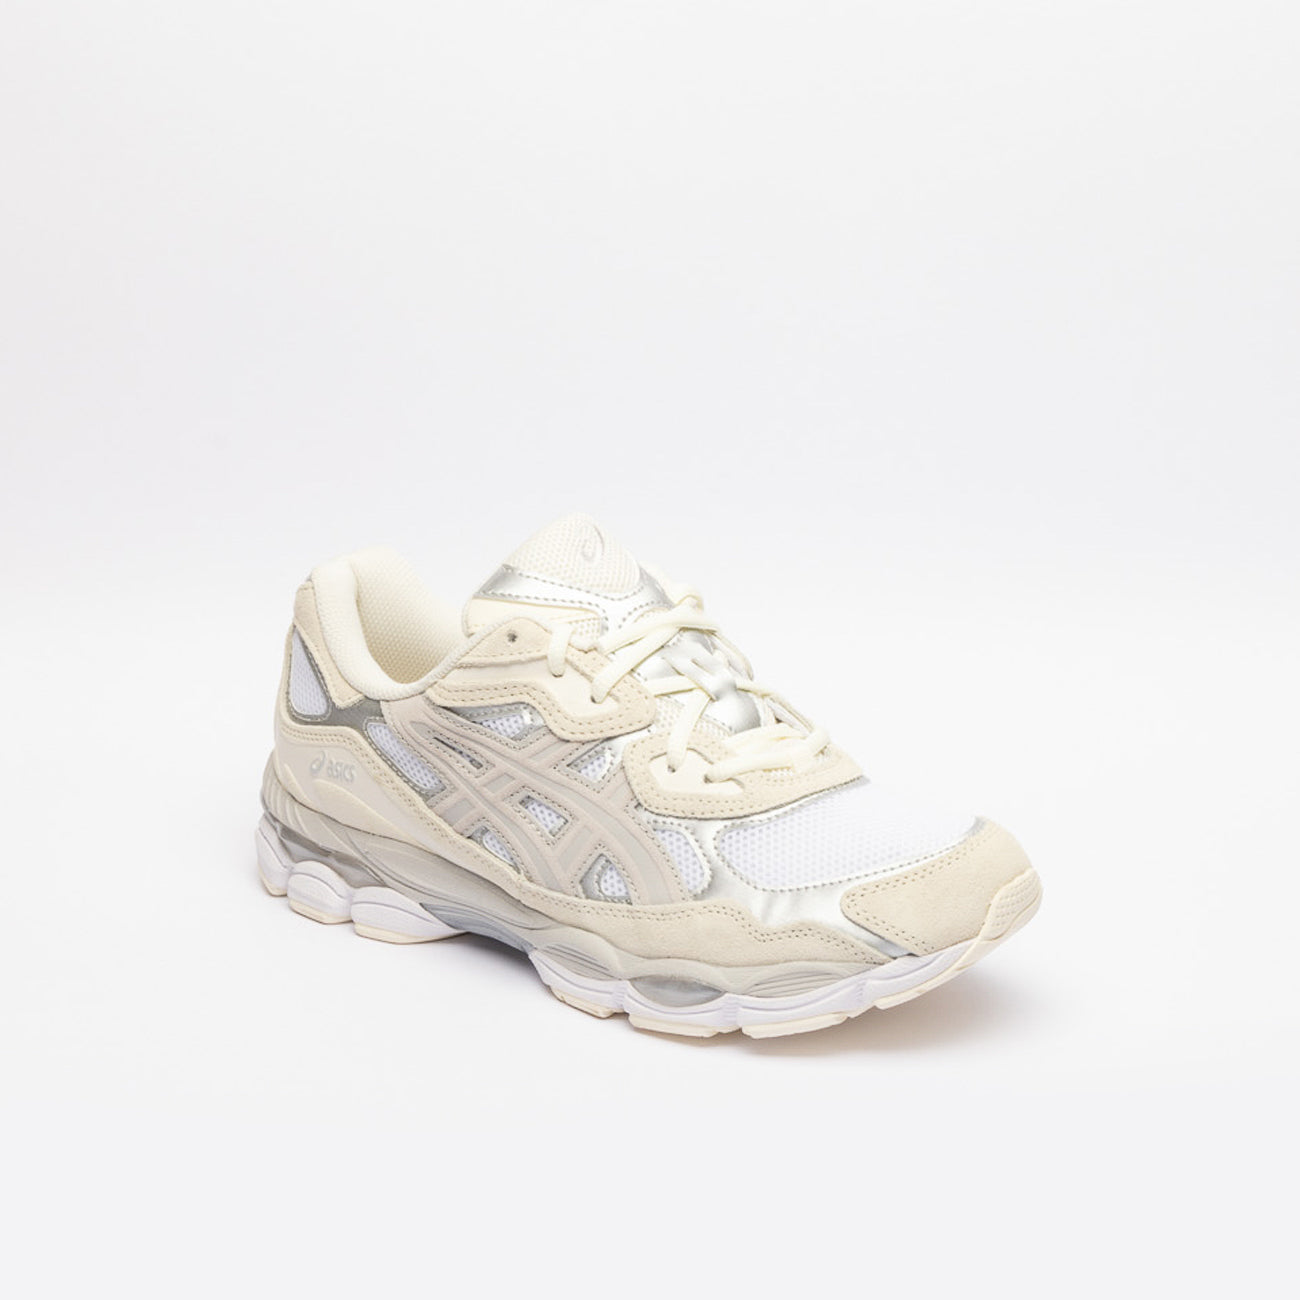 Sneaker running Asics Gel NYC in tessuto bianco e camoscio beige